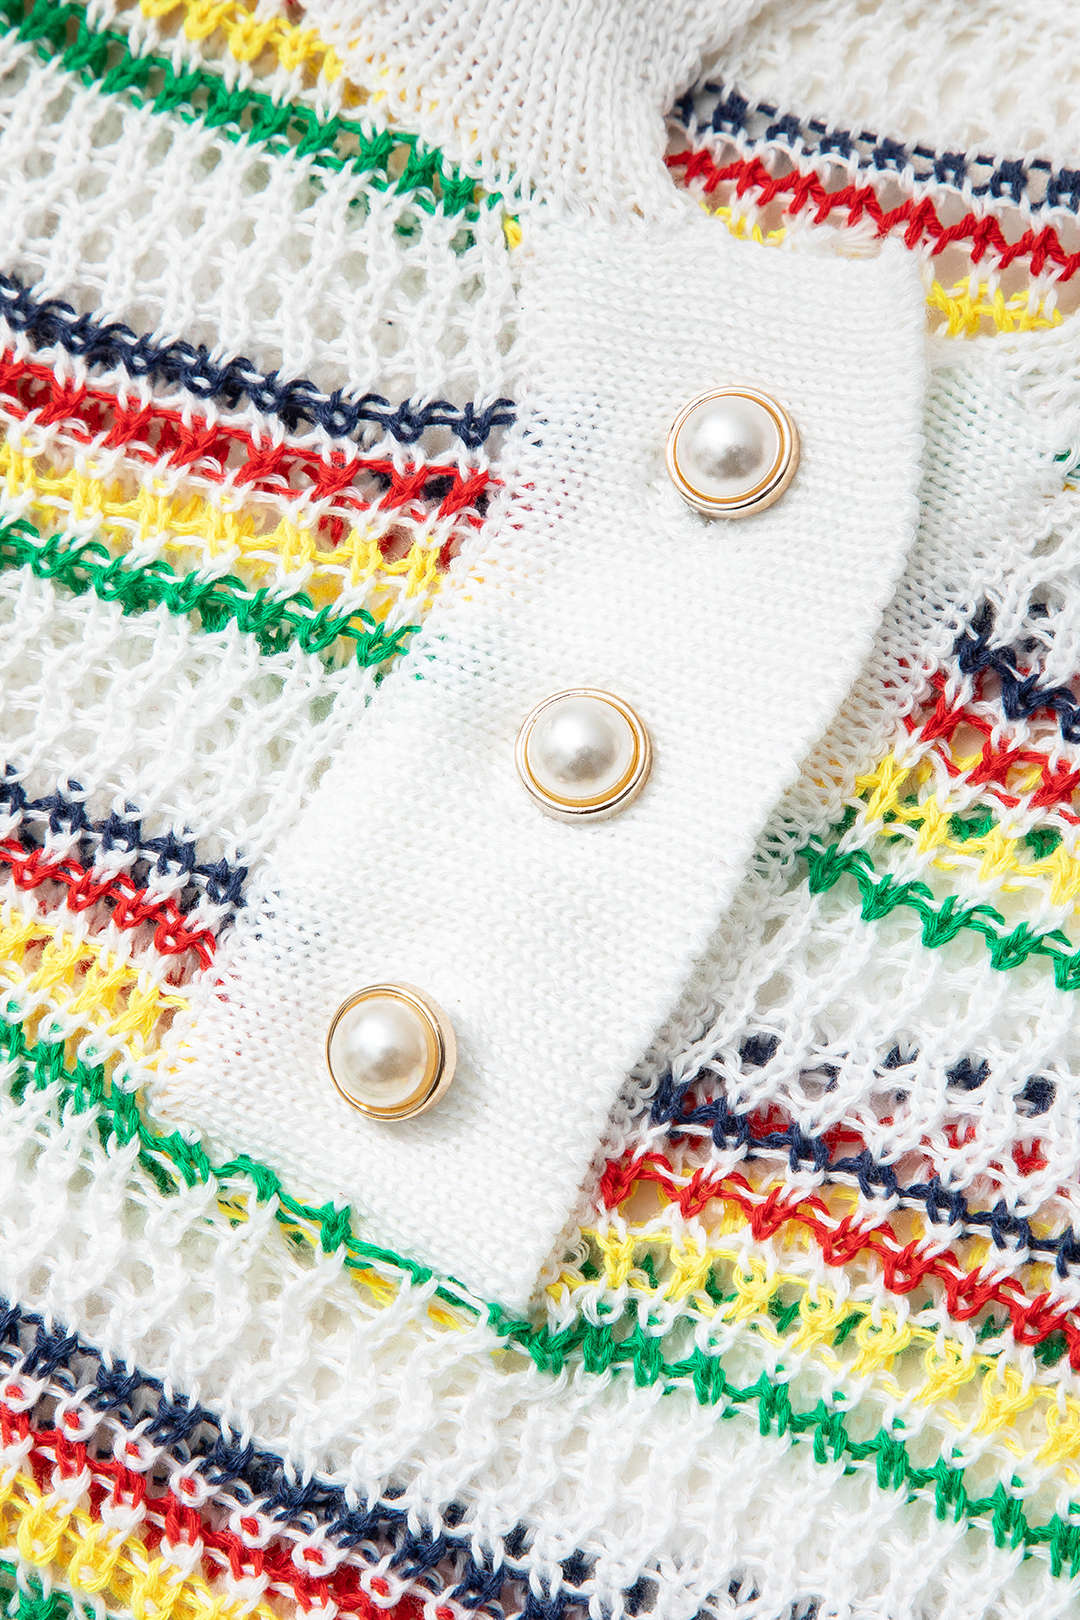 Stripe Collar Open Knit Mini Dress